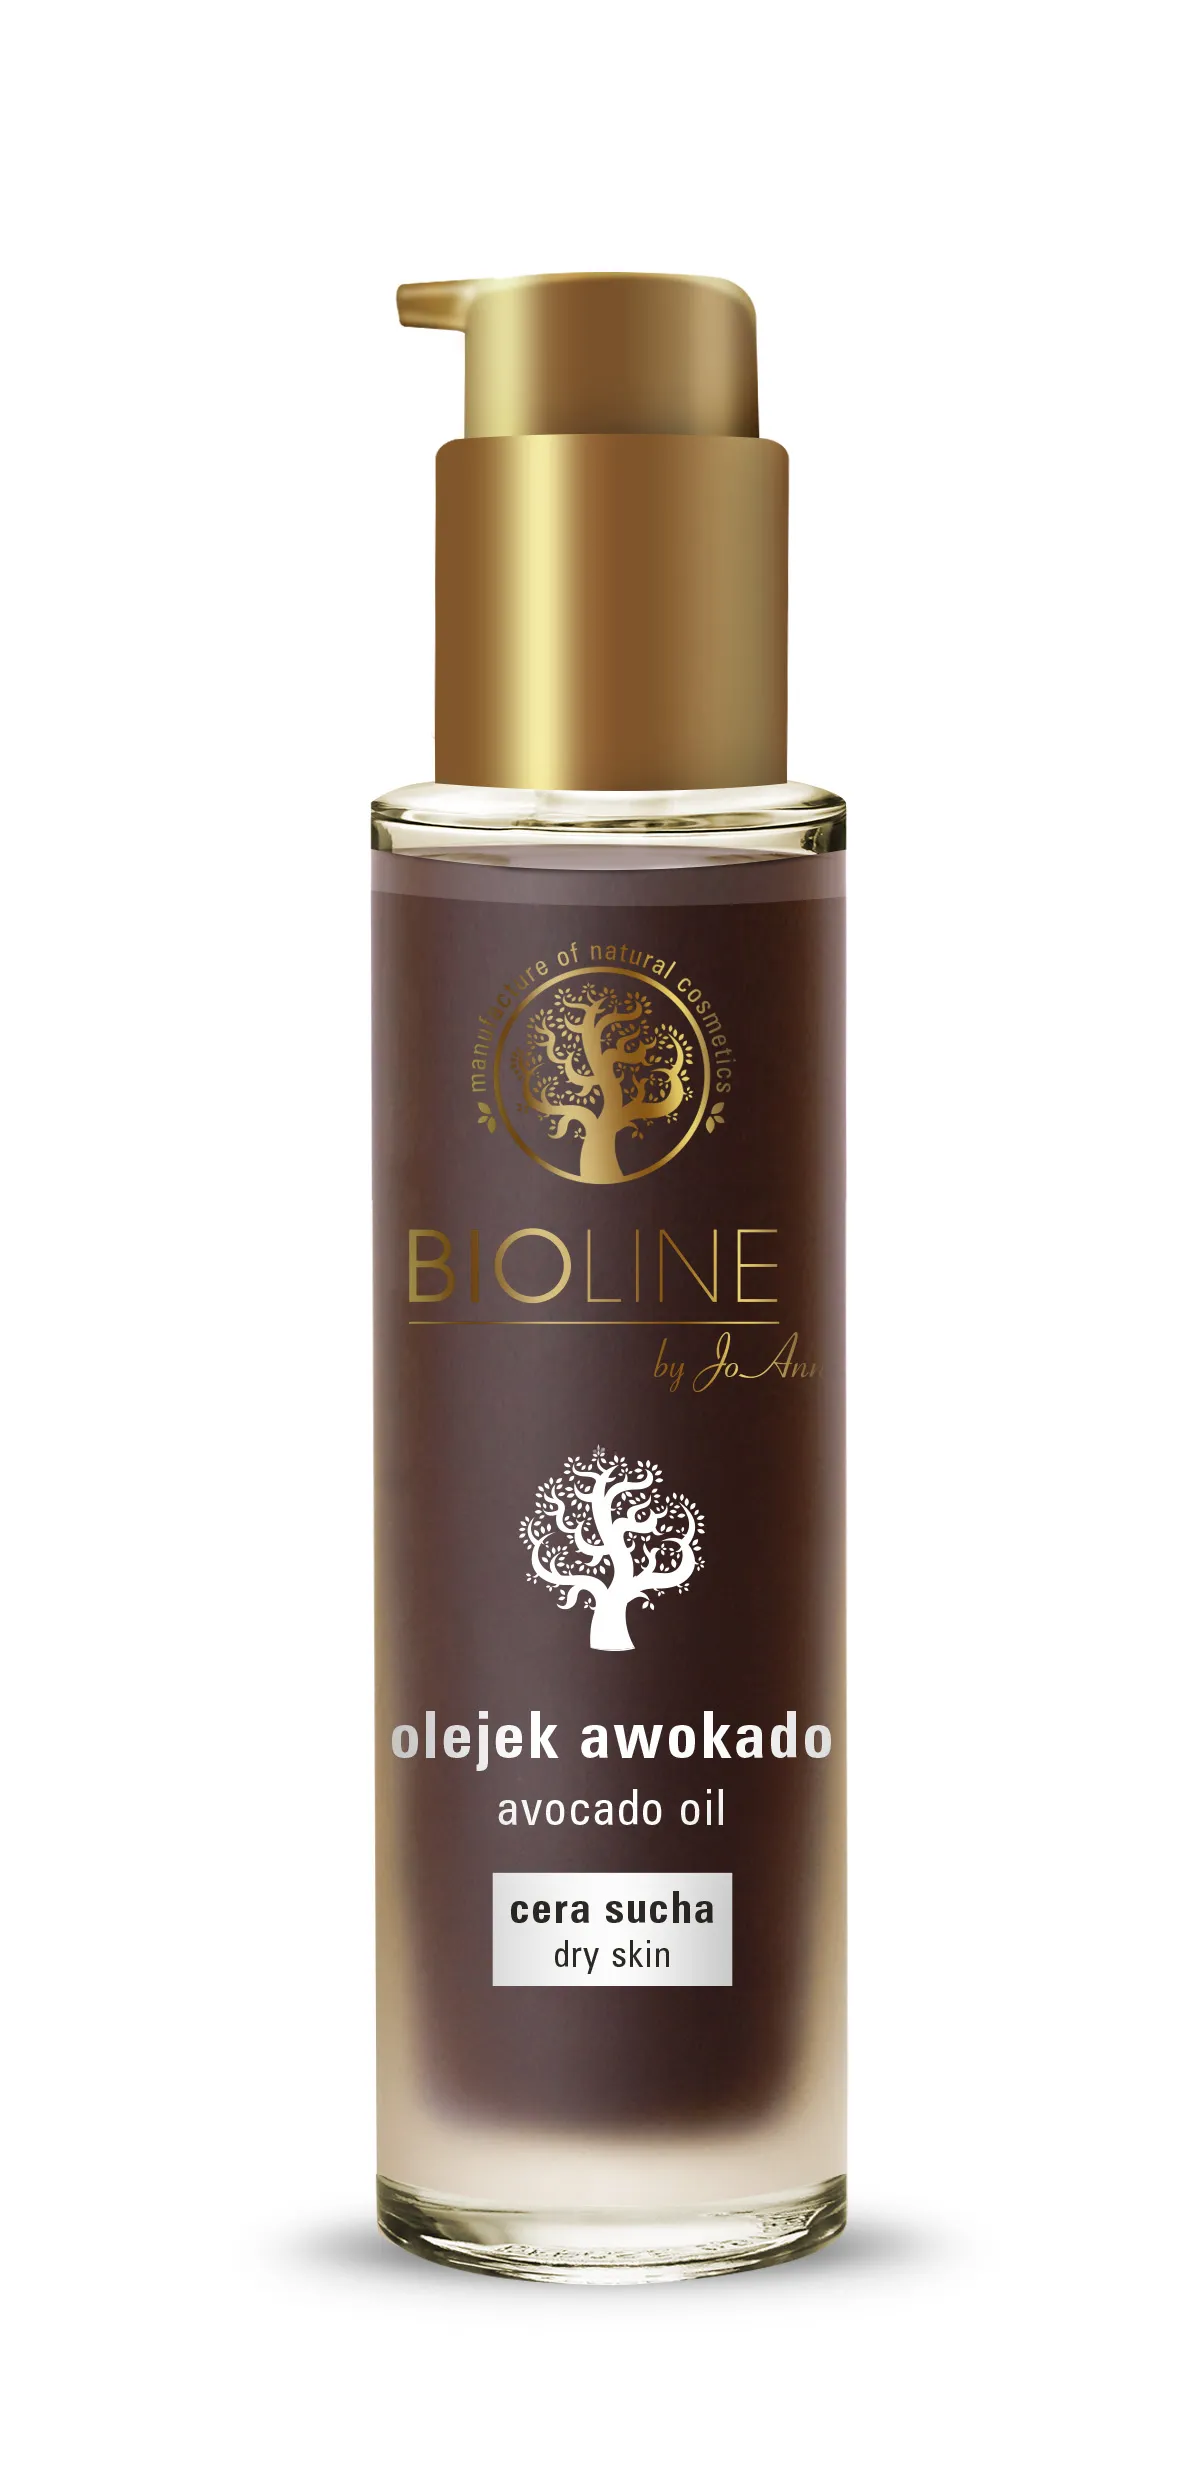 Bioline by JoAnn 100% olejek awokado, 50 ml